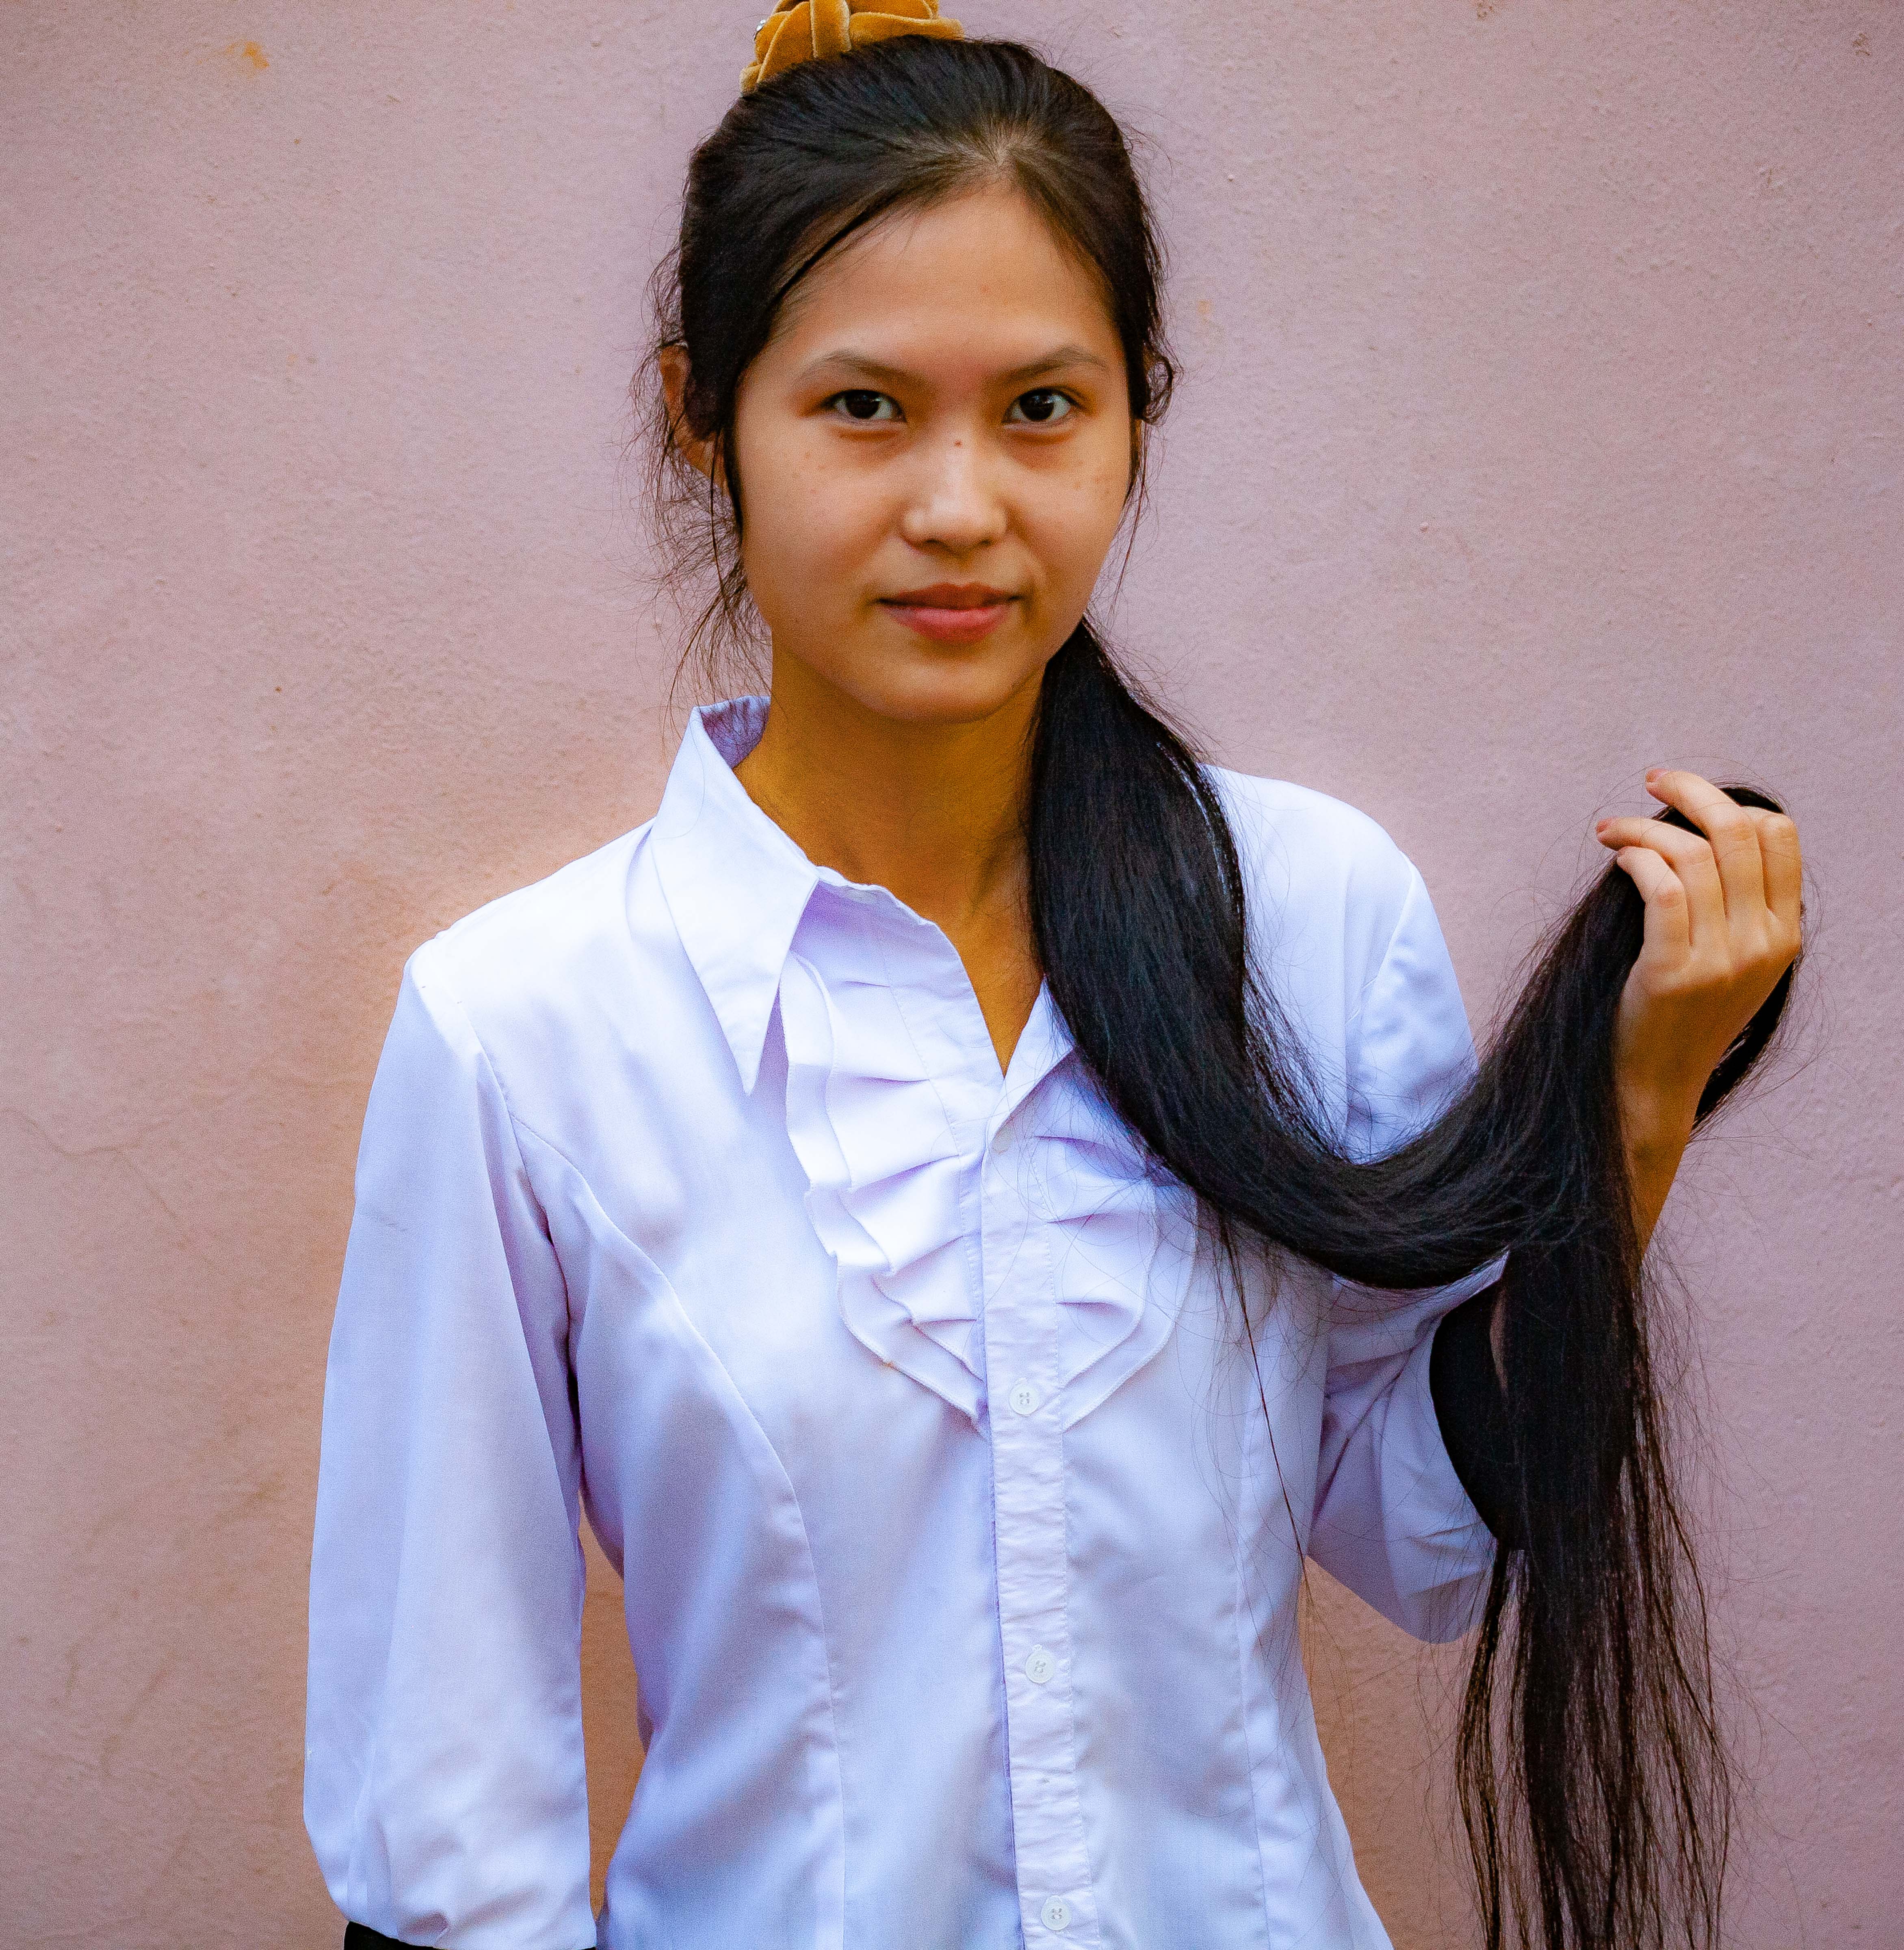 Myanmar, Kachin Prov, Long Hair Girl, 2009, IMG 3340